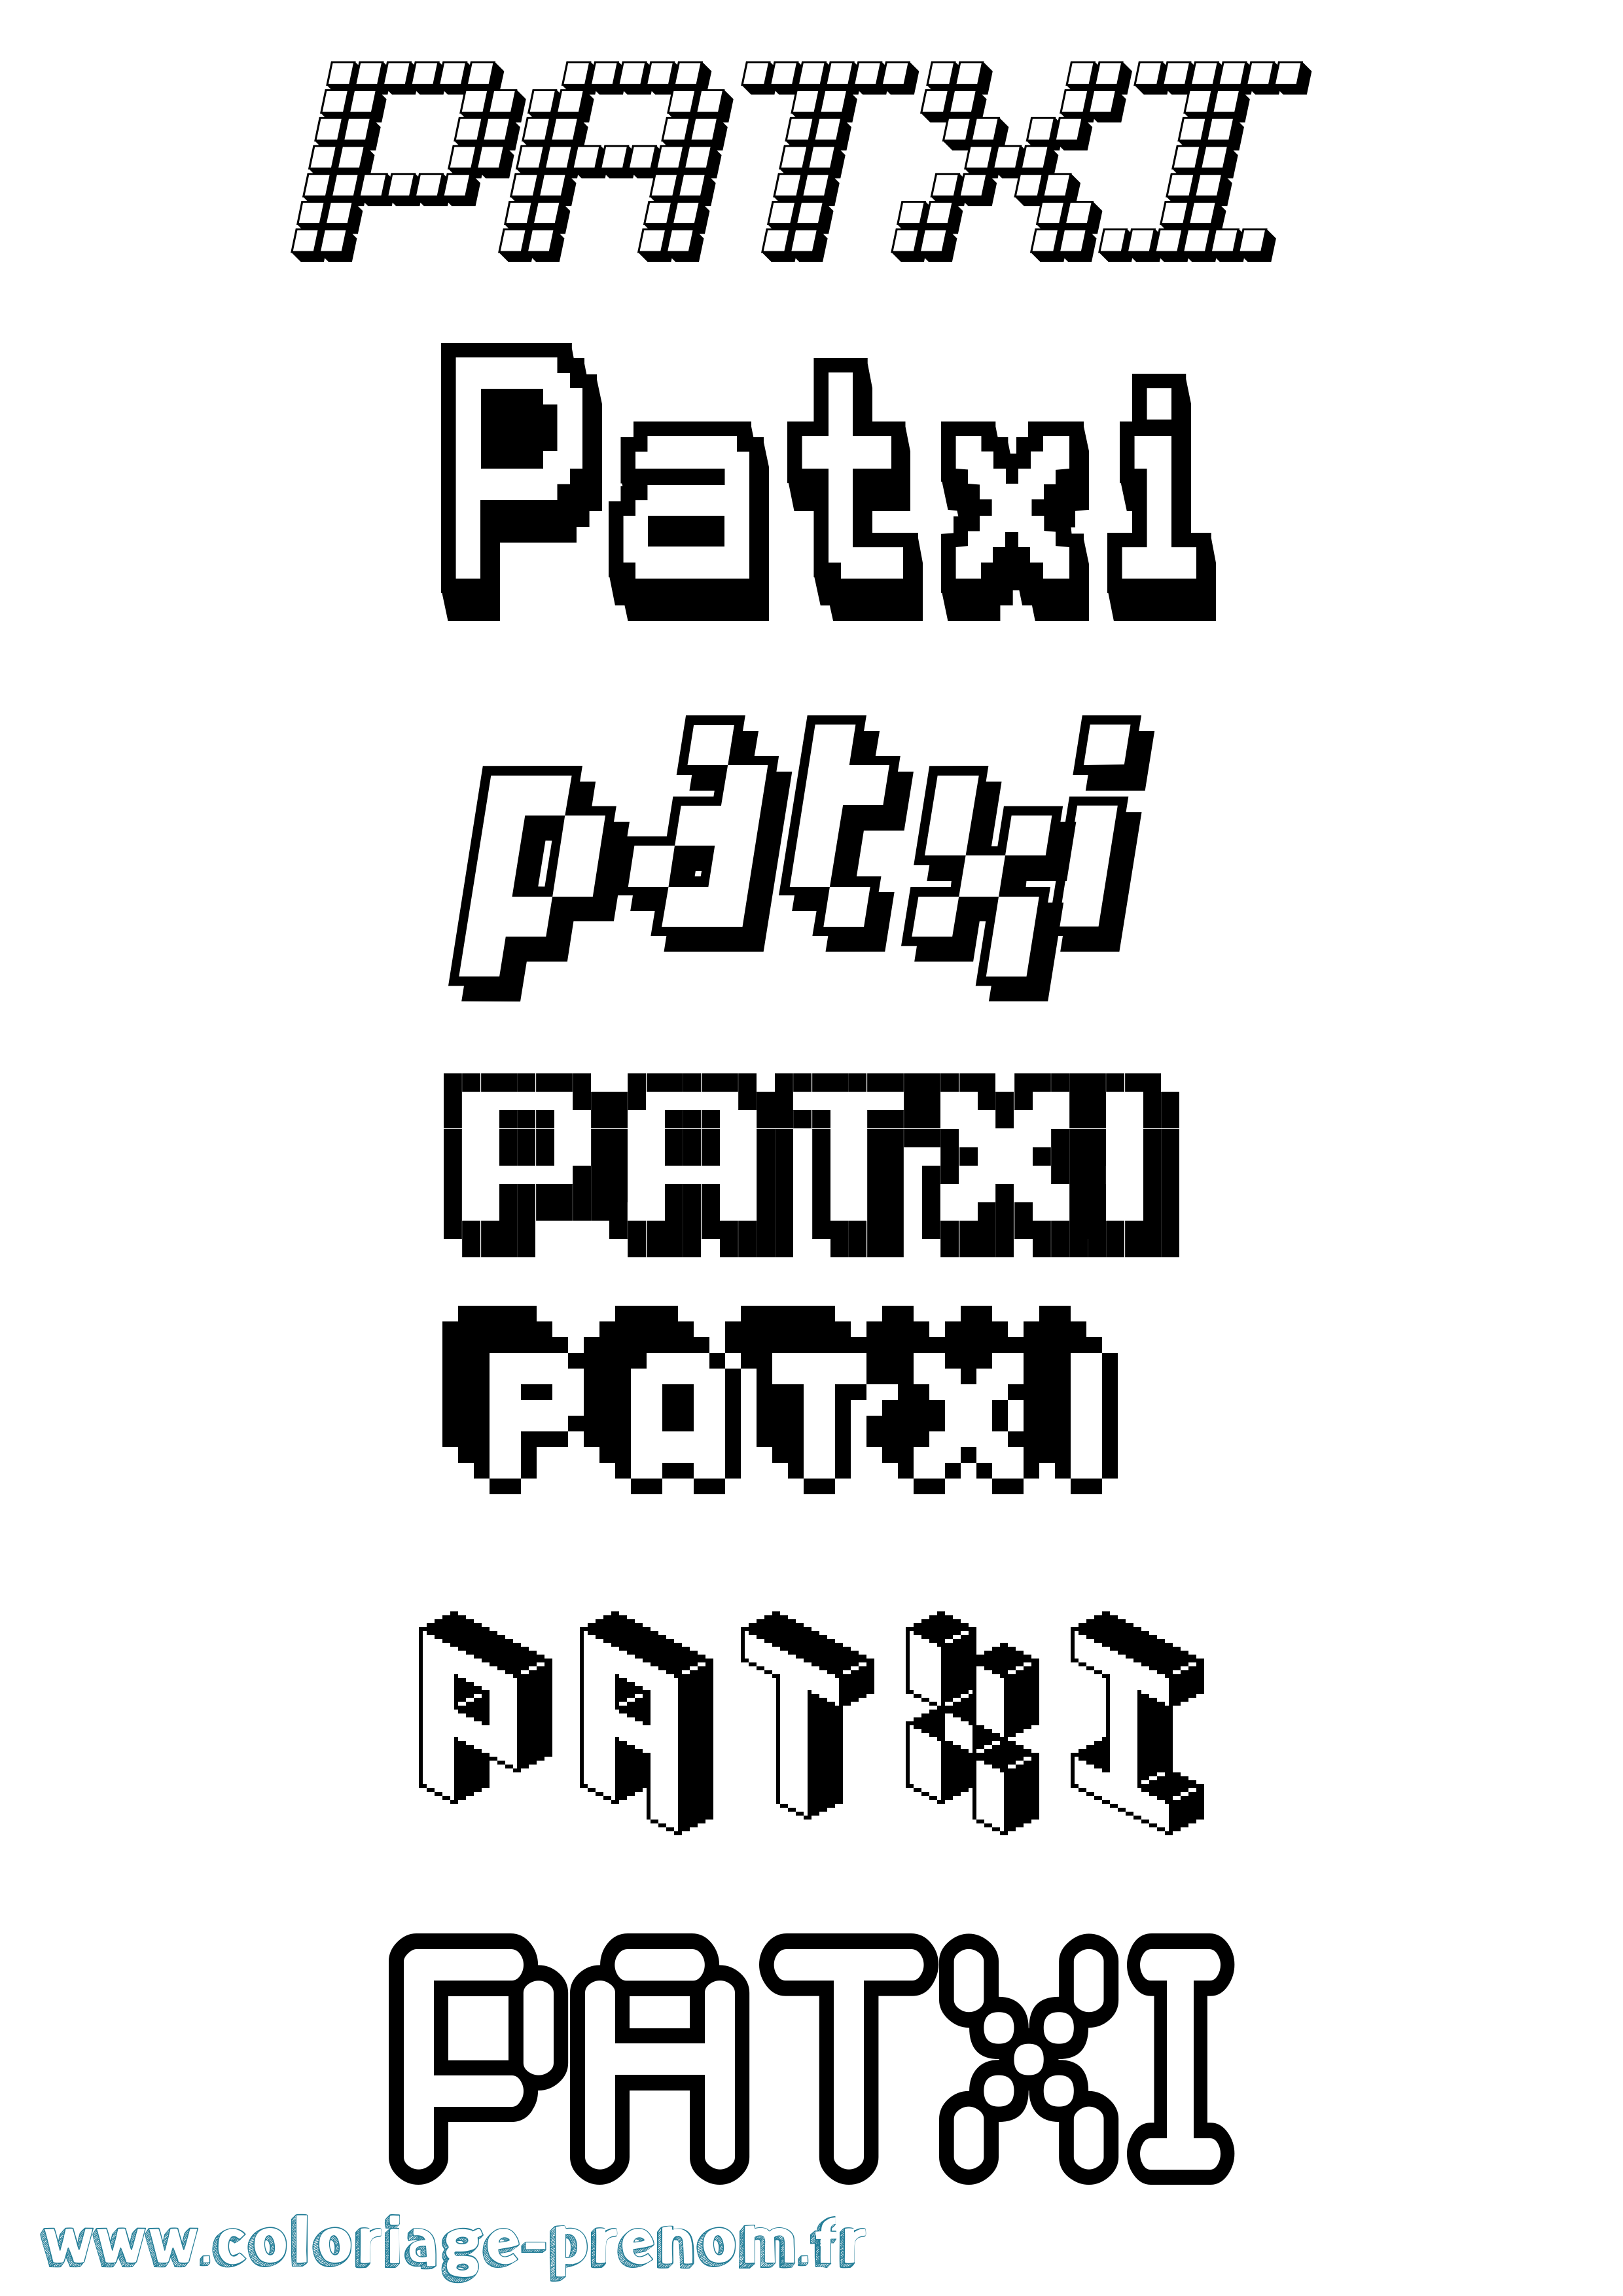 Coloriage prénom Patxi Pixel